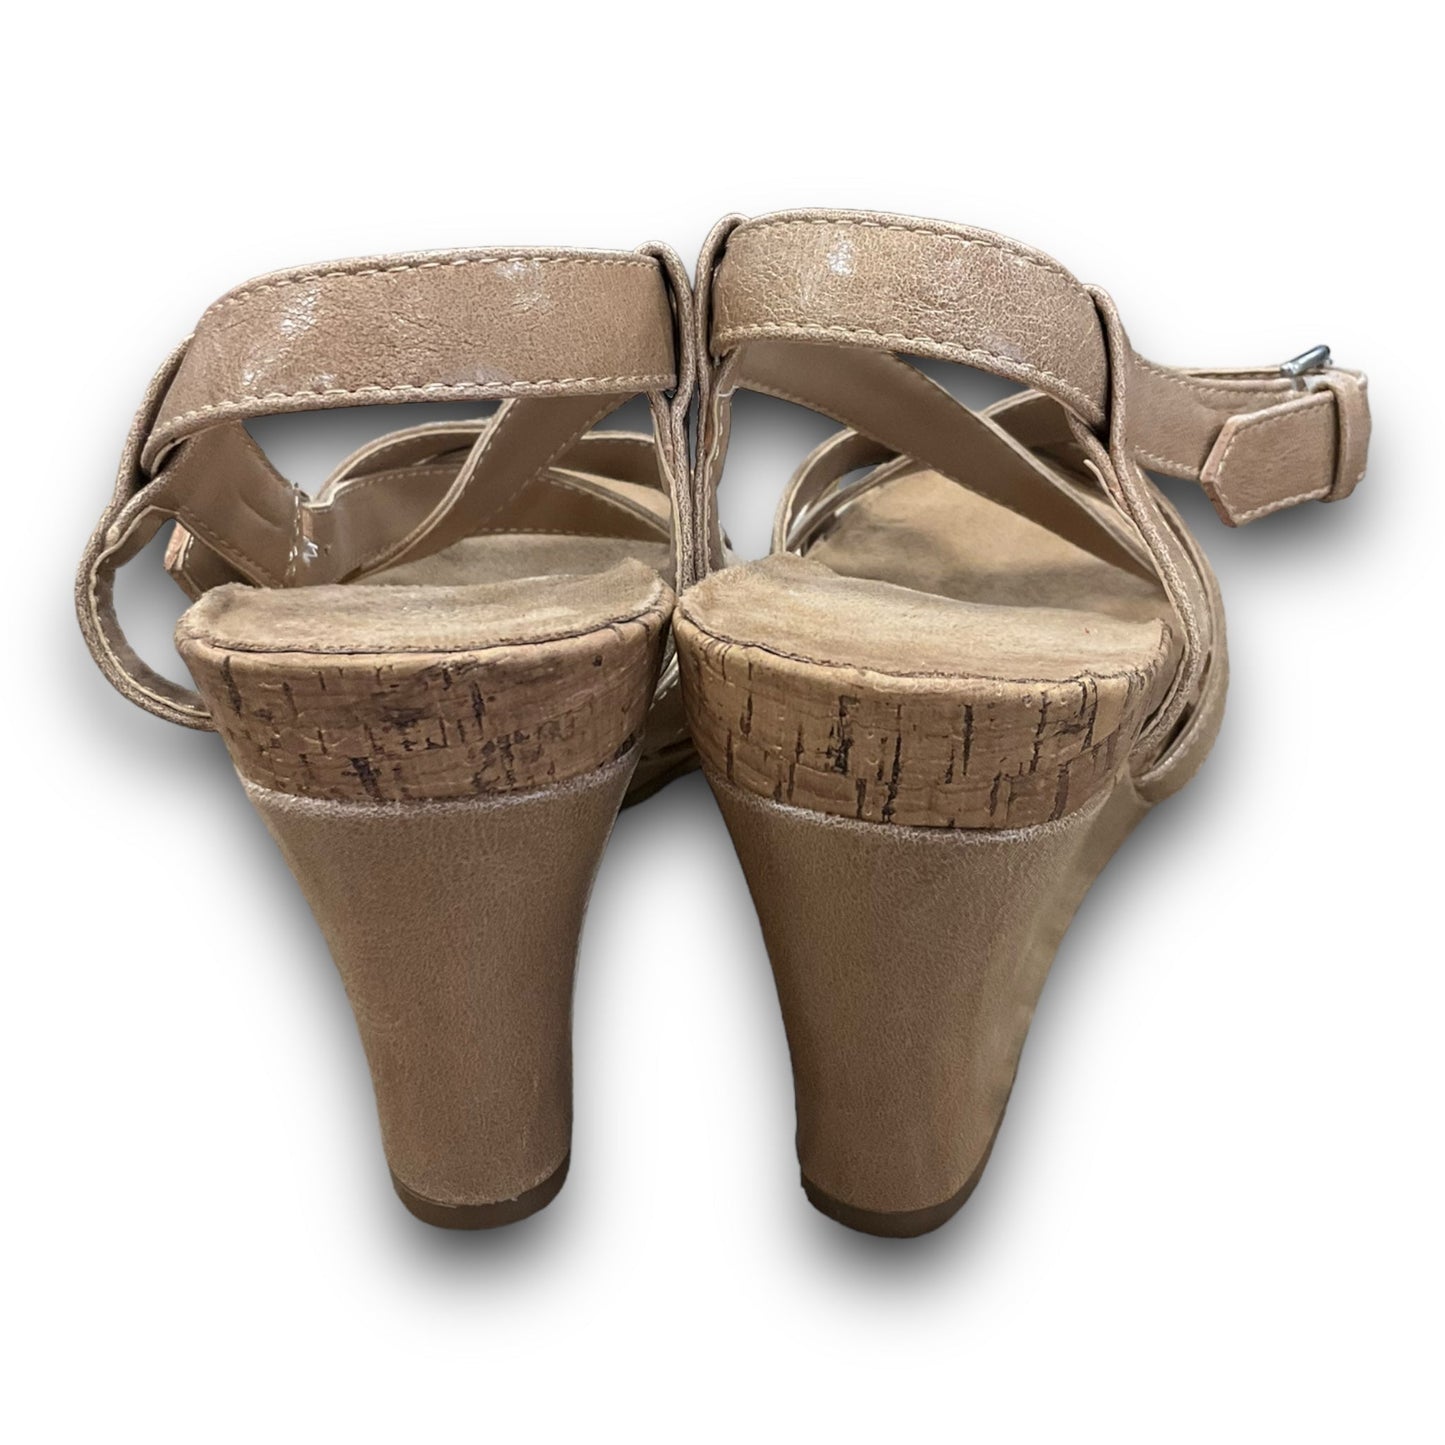 Sandals Heels Wedge By Aerosoles  Size: 9.5